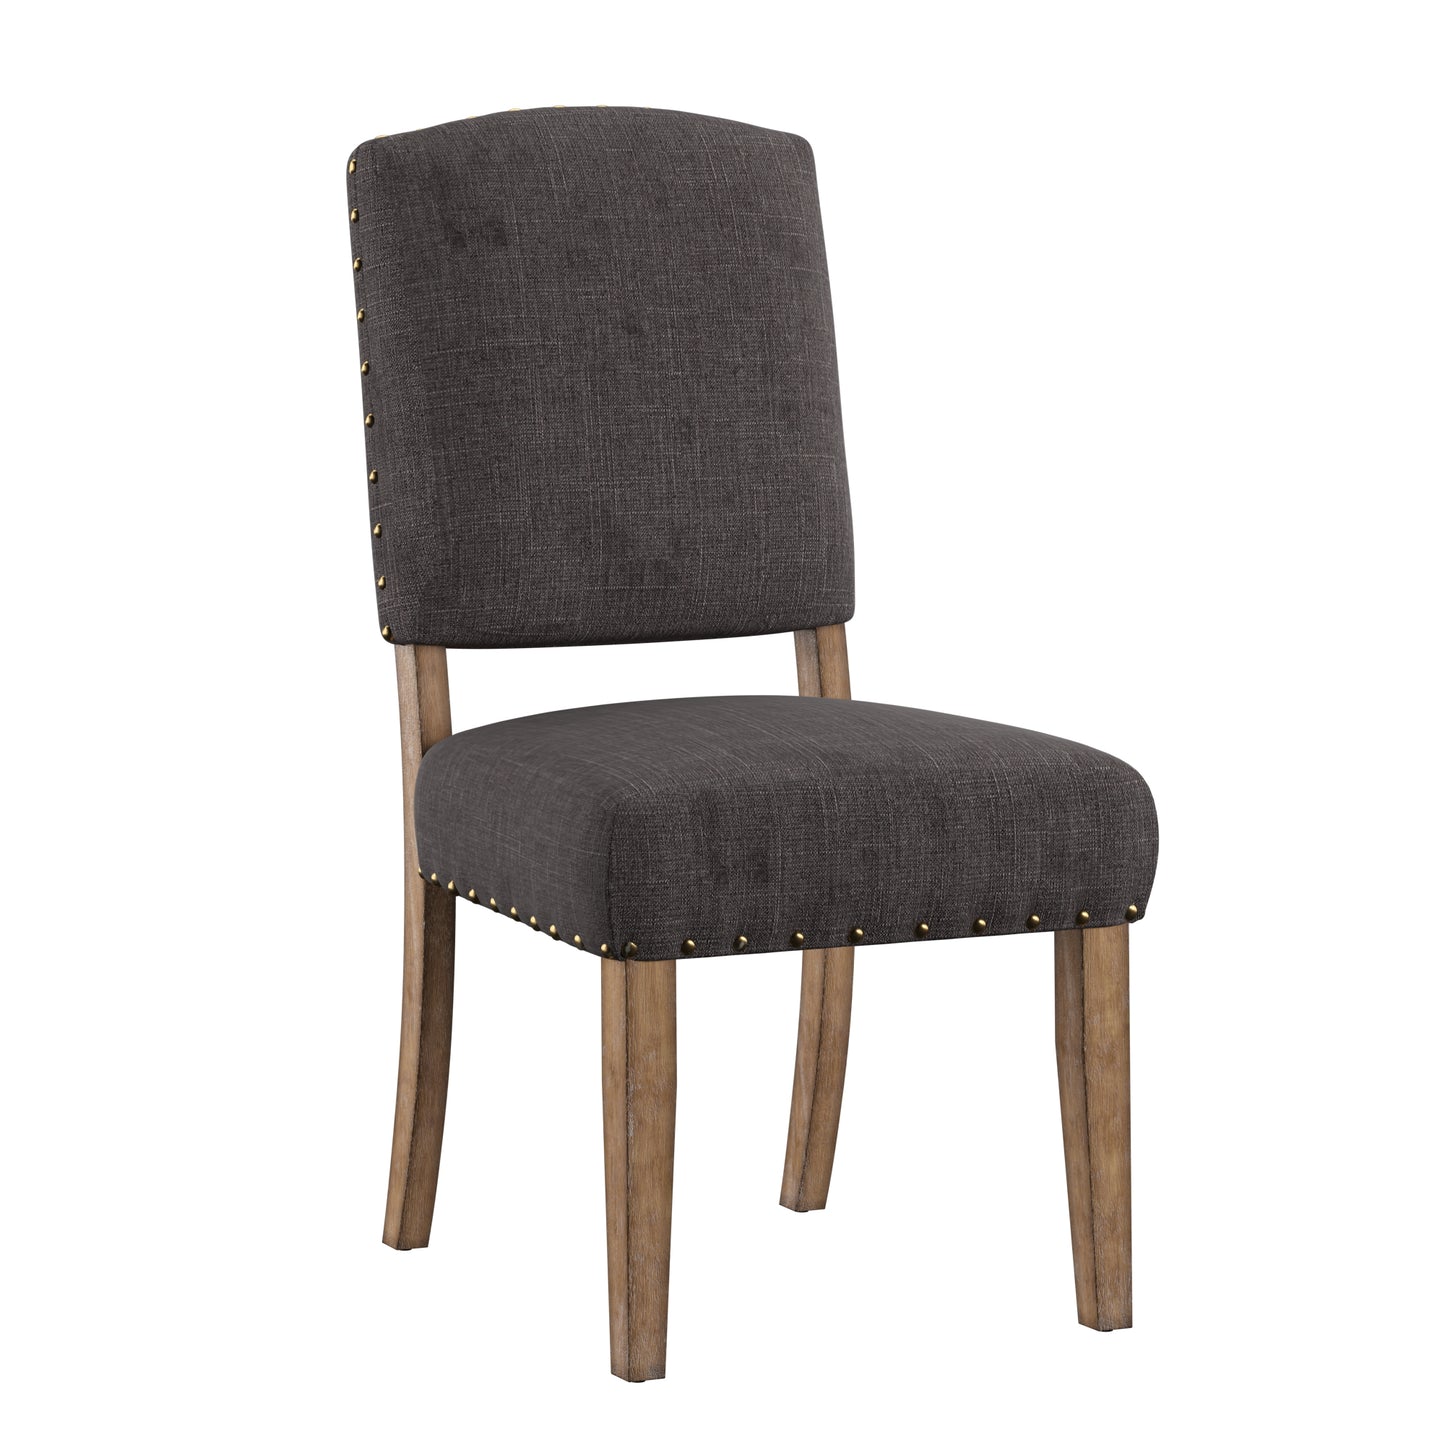 Nailhead Upholstered Dining Chairs (Set of 2) - Natural Finish, Dark Grey Linen